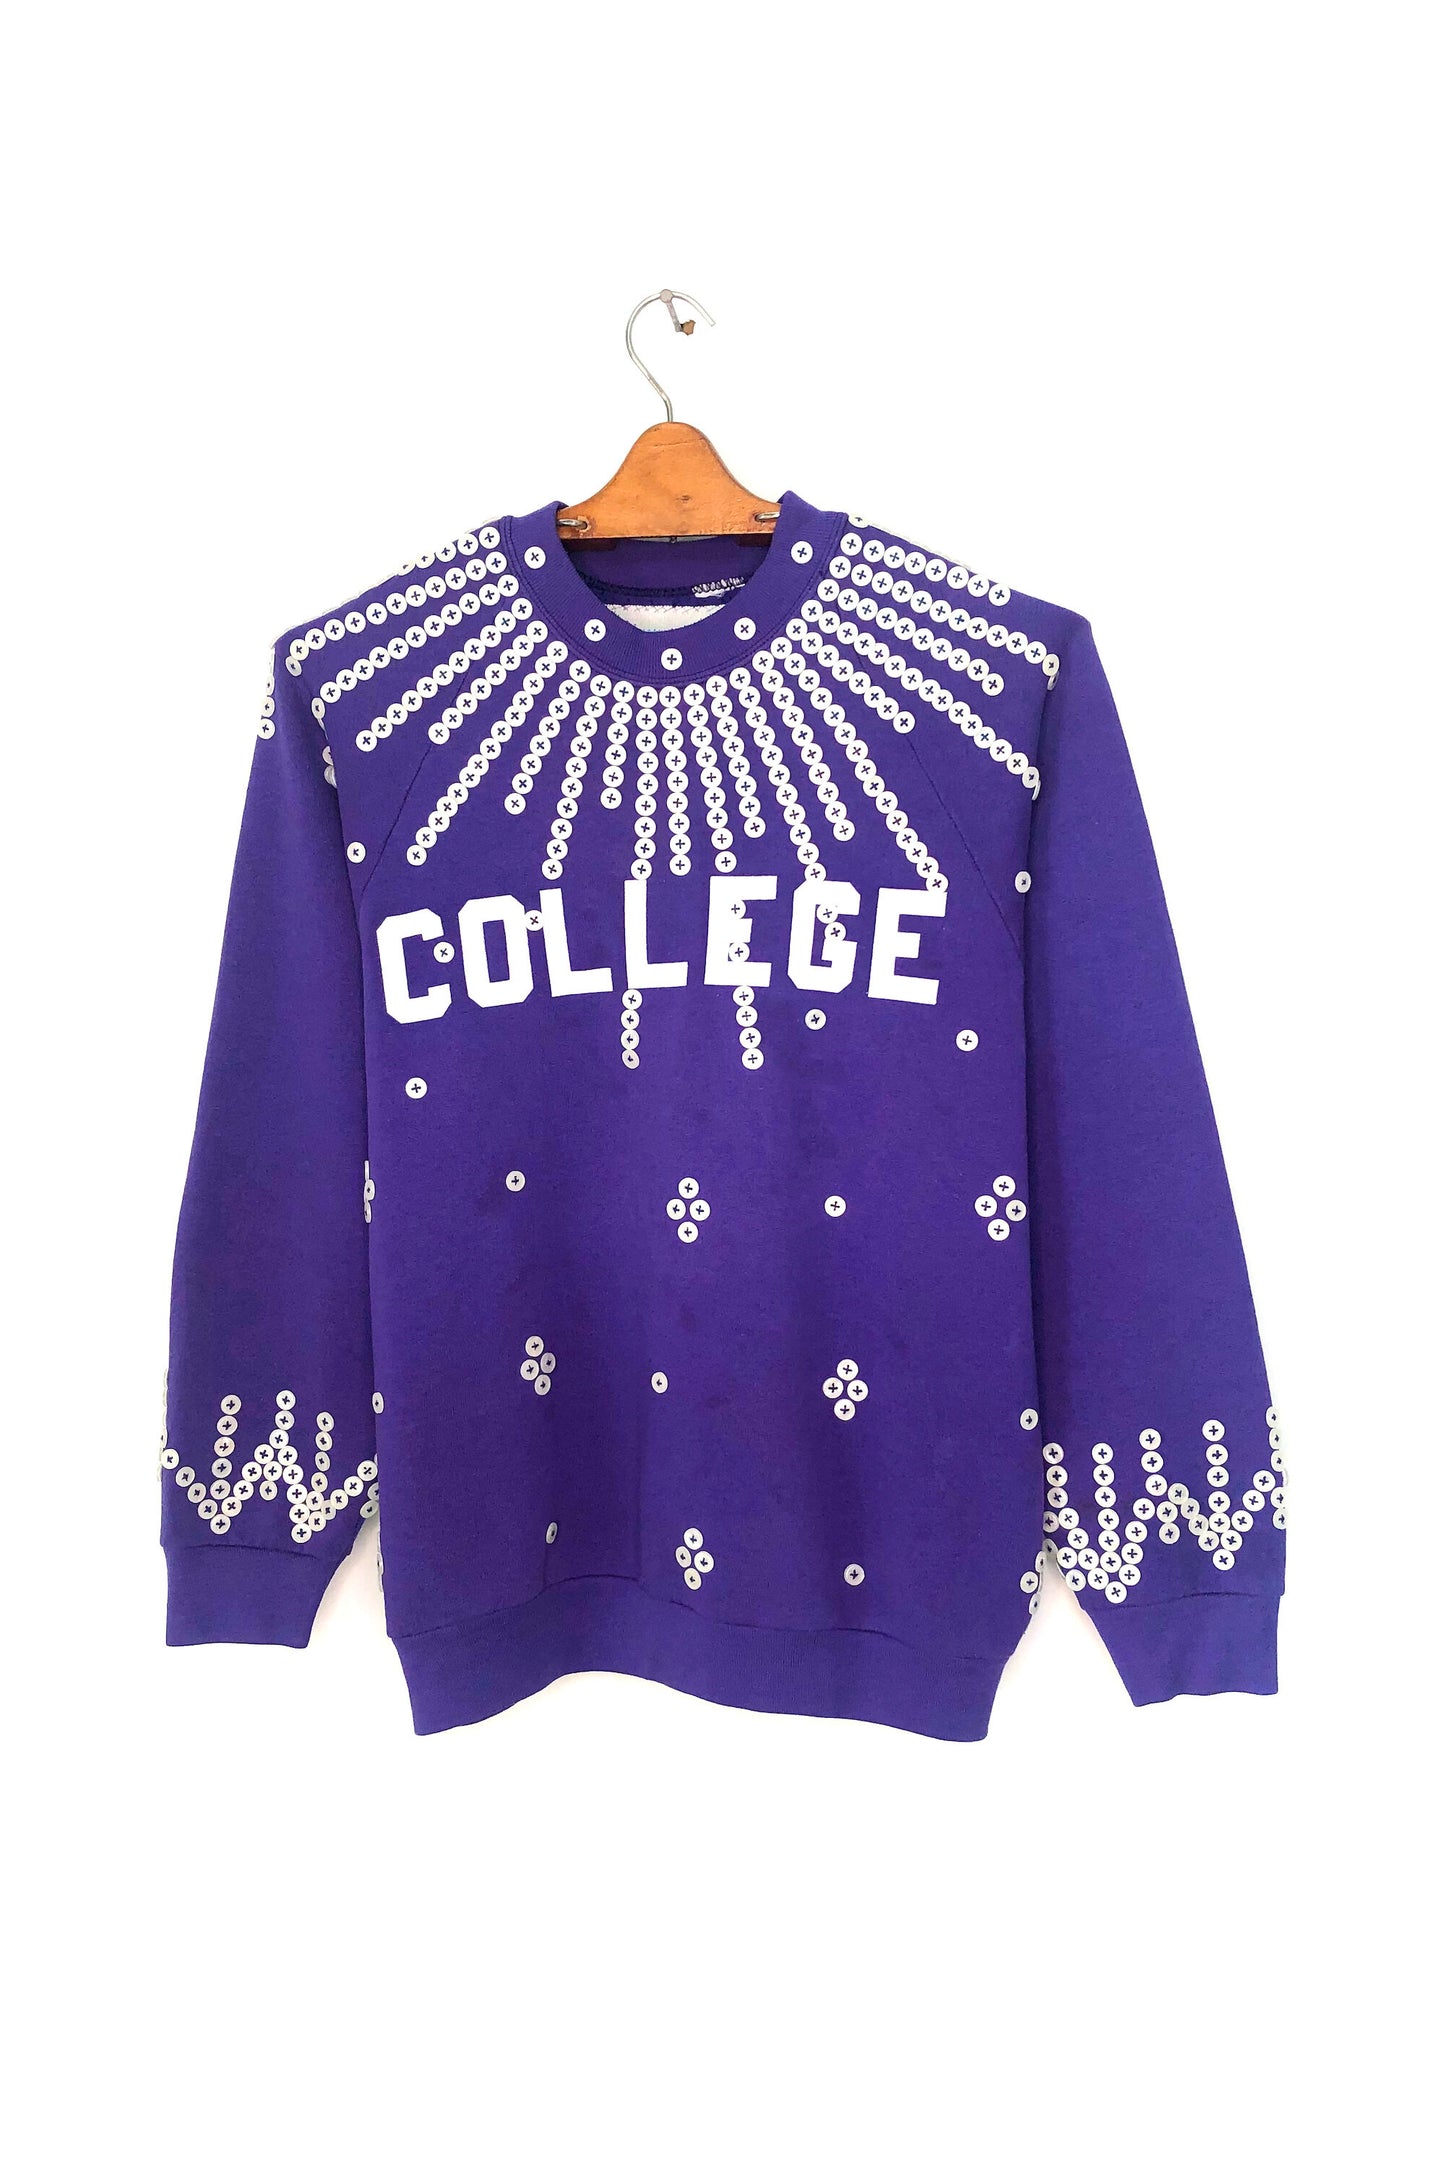 "Pearlie Sunray" College Sweatshirt - Graphic/Pearls